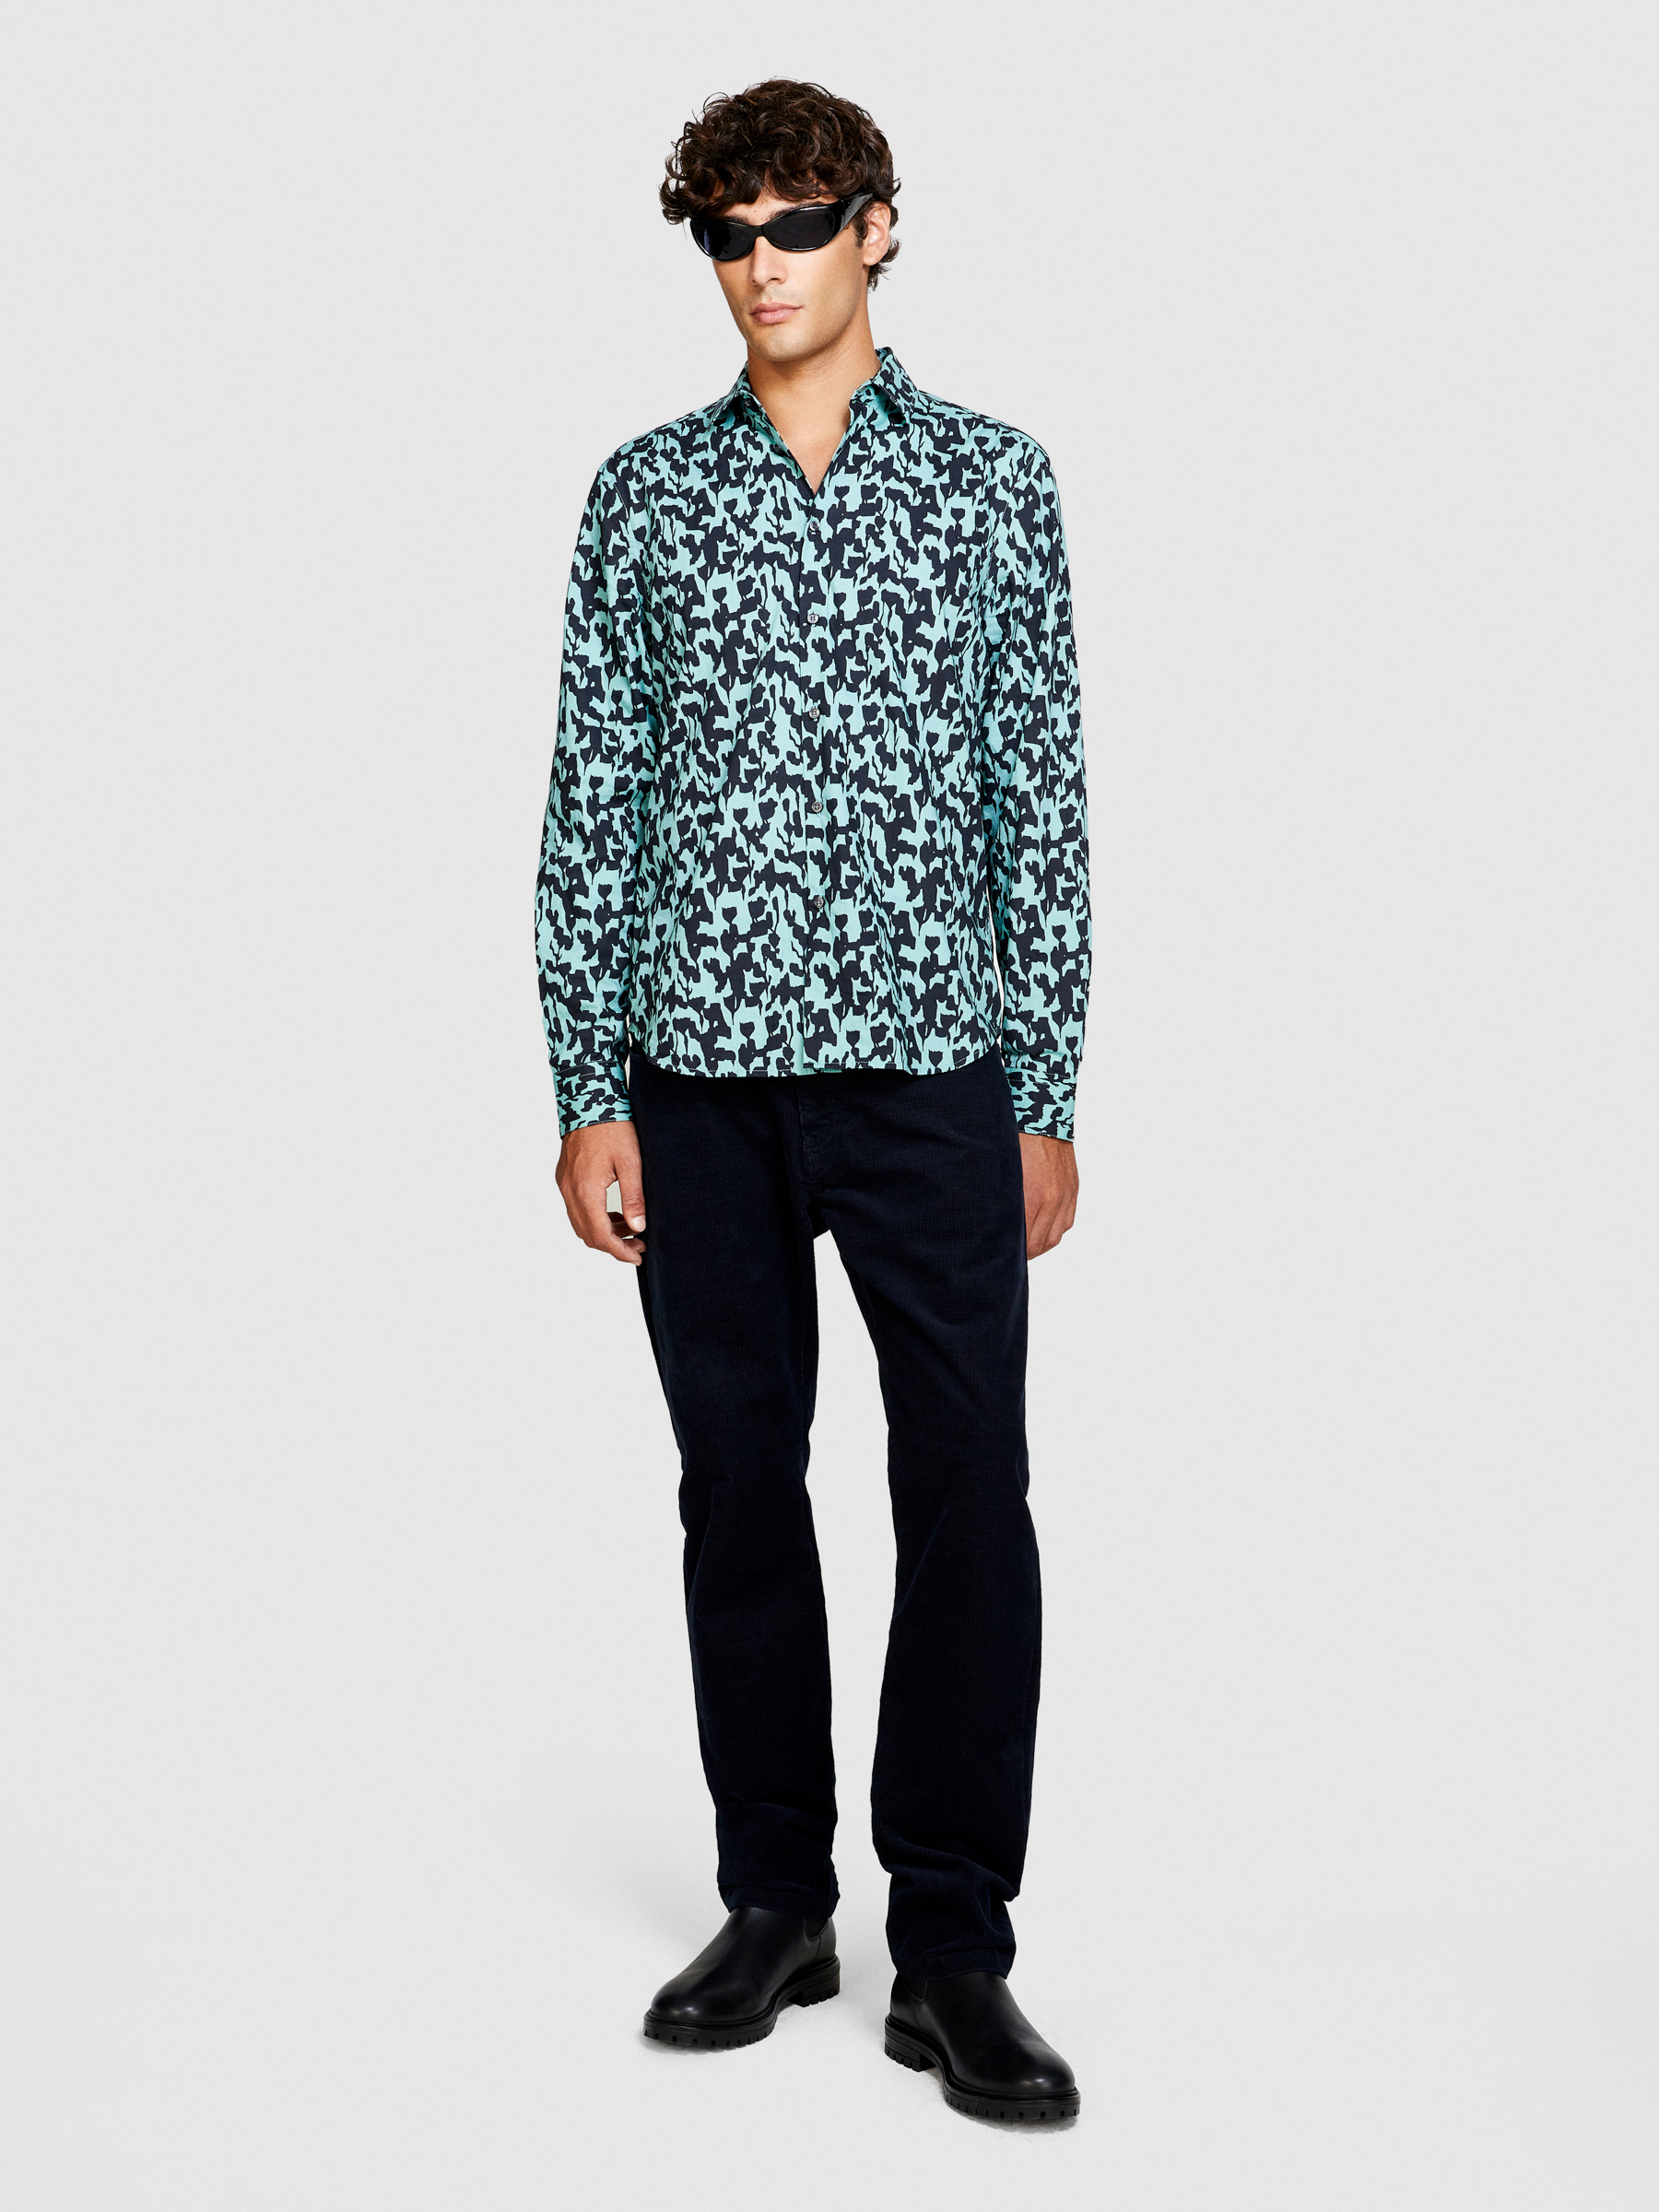 Sisley - Printed Shirt, Man, Turquoise, Size: S